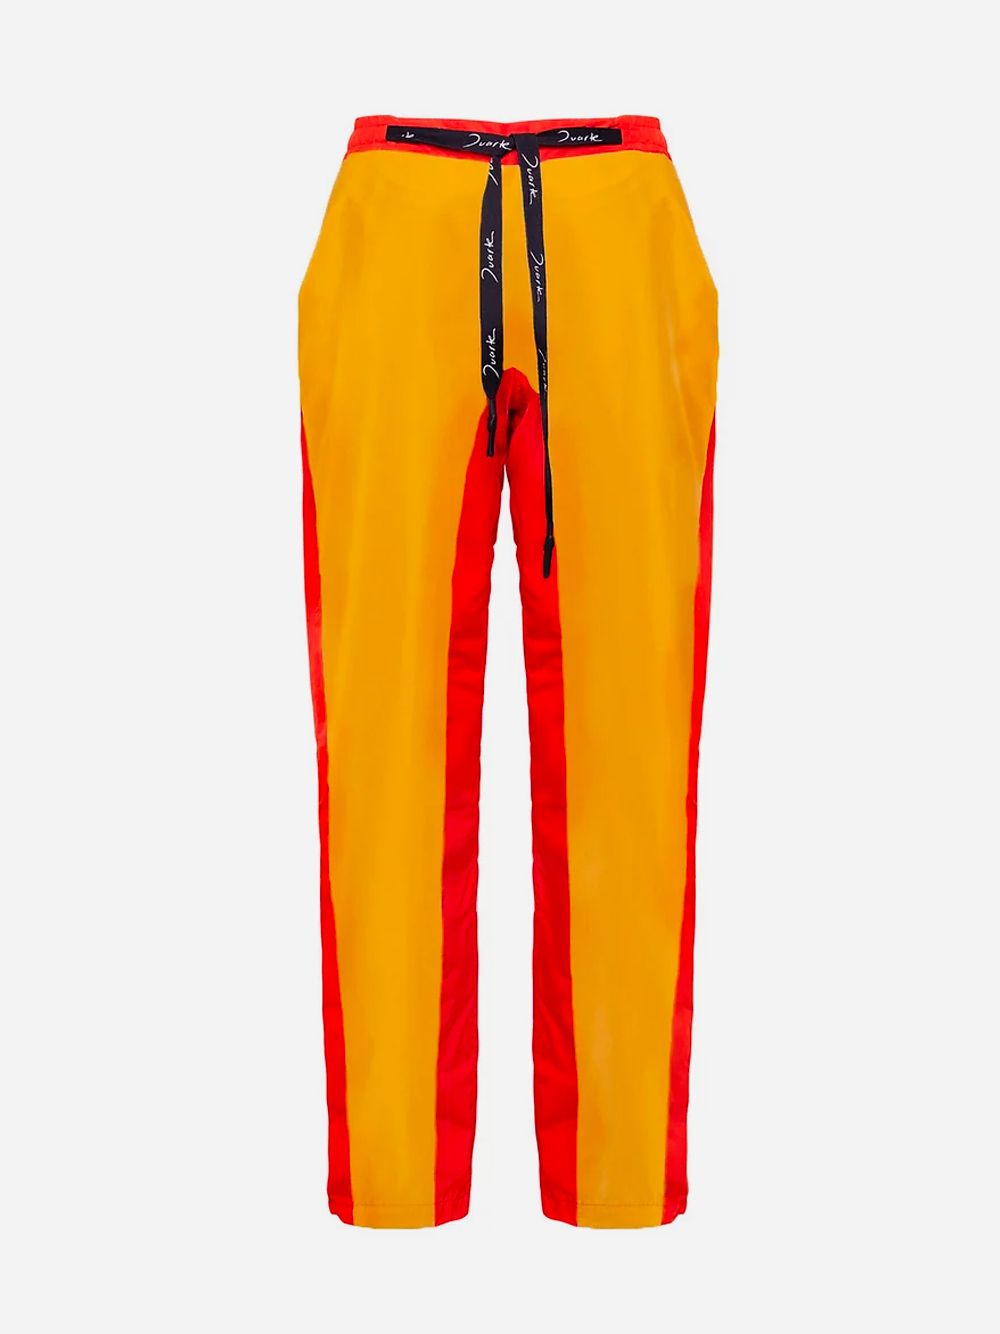 Calças Yellow & Red Panelled 